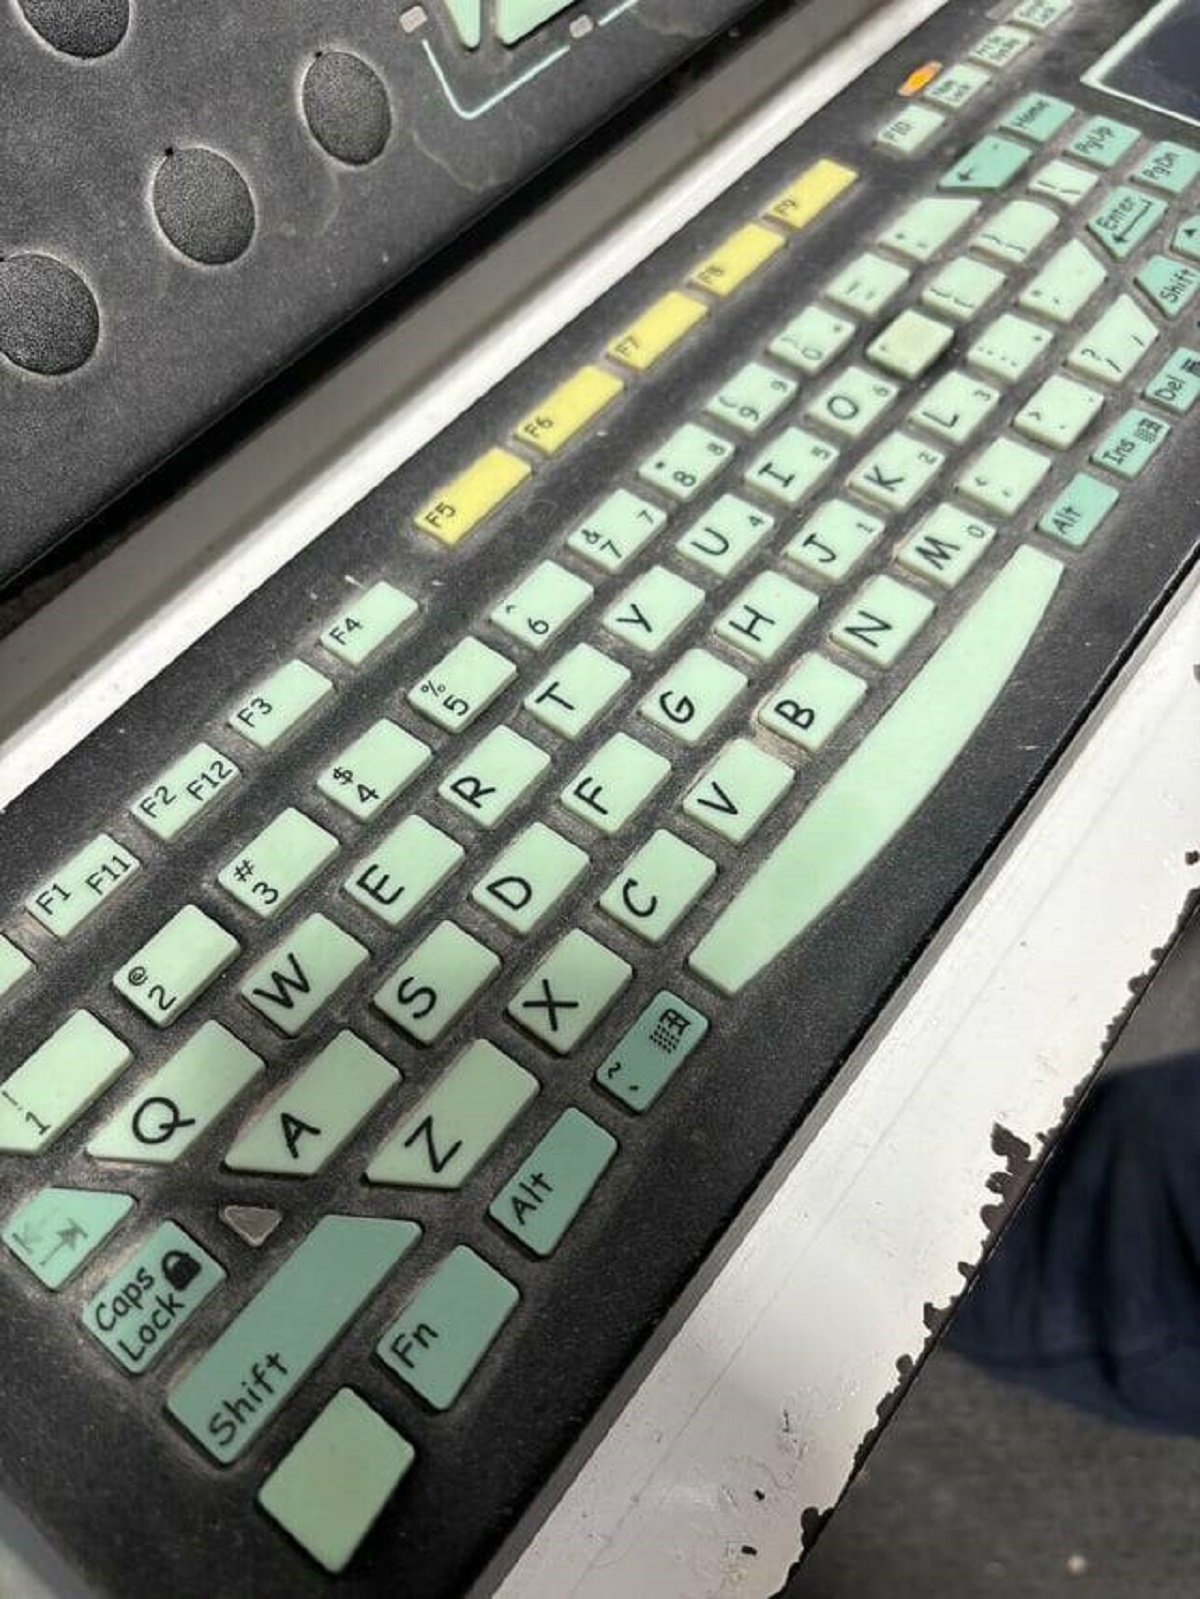 "Keyboard on a machine uses comic sans font"